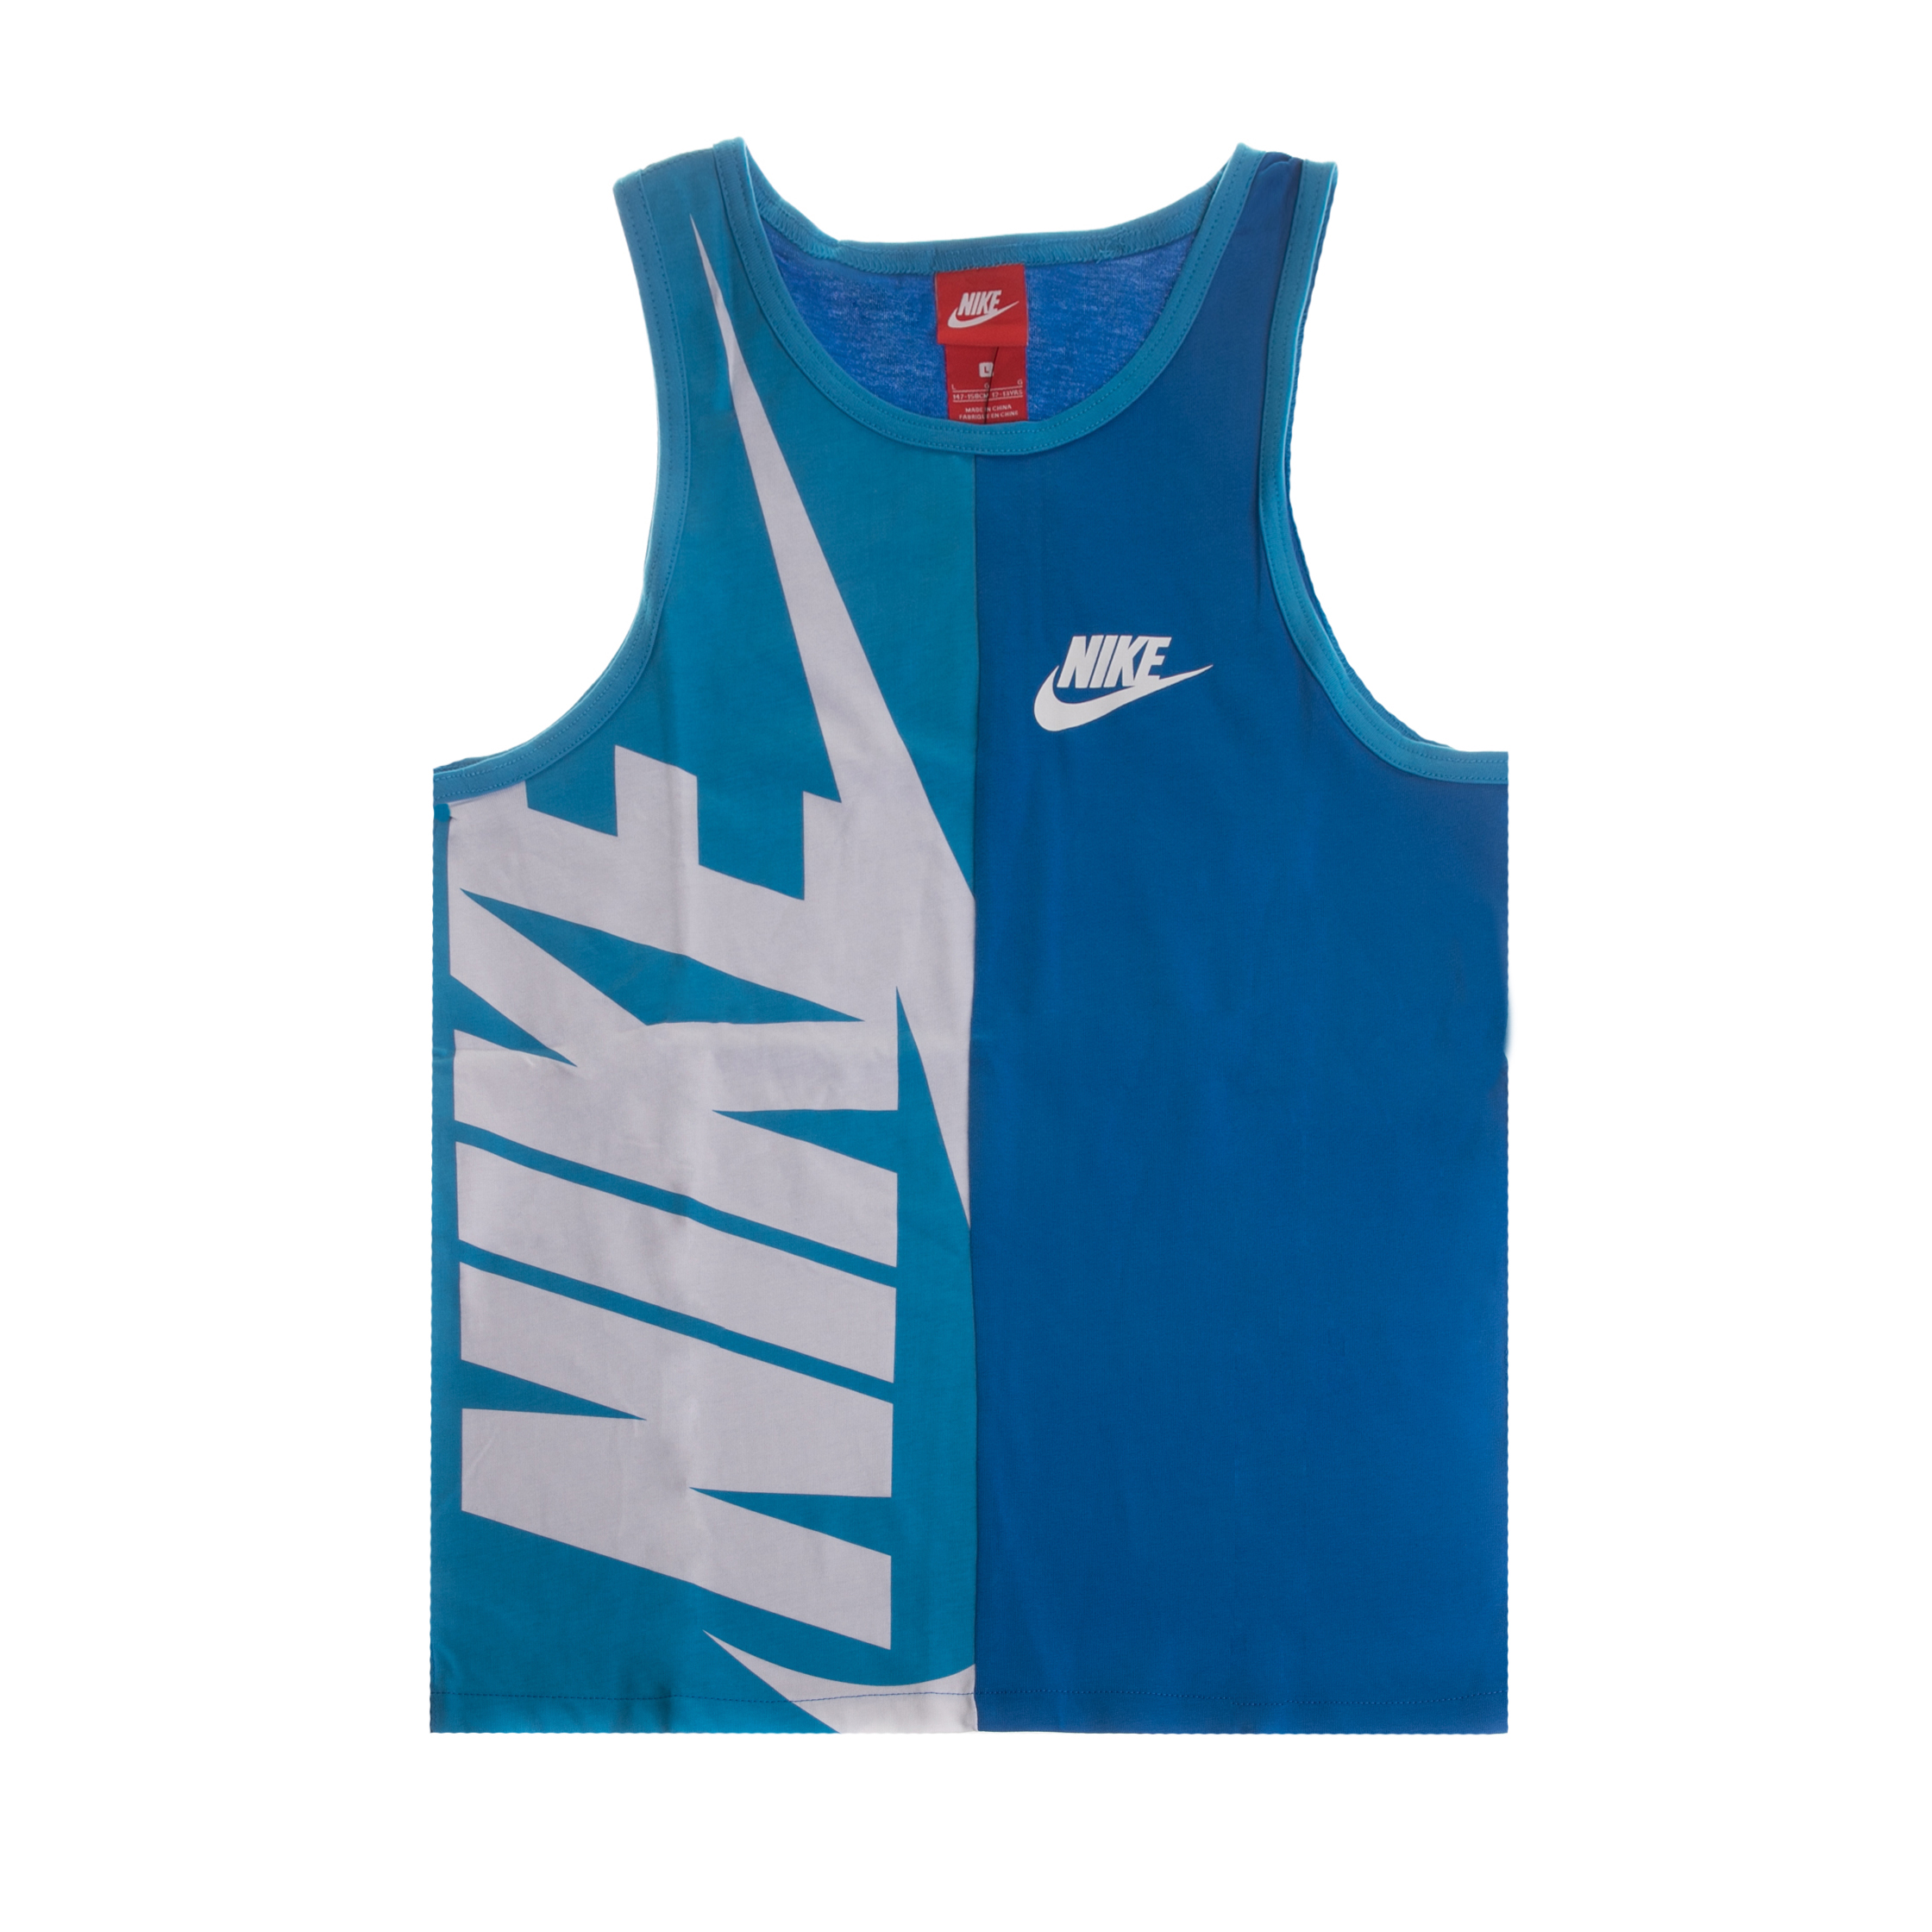 NIKE - Παιδική αμάνικη μπλούζα NIKE NSW GFX 2 μπλε Παιδικά/Boys/Ρούχα/Αθλητικά